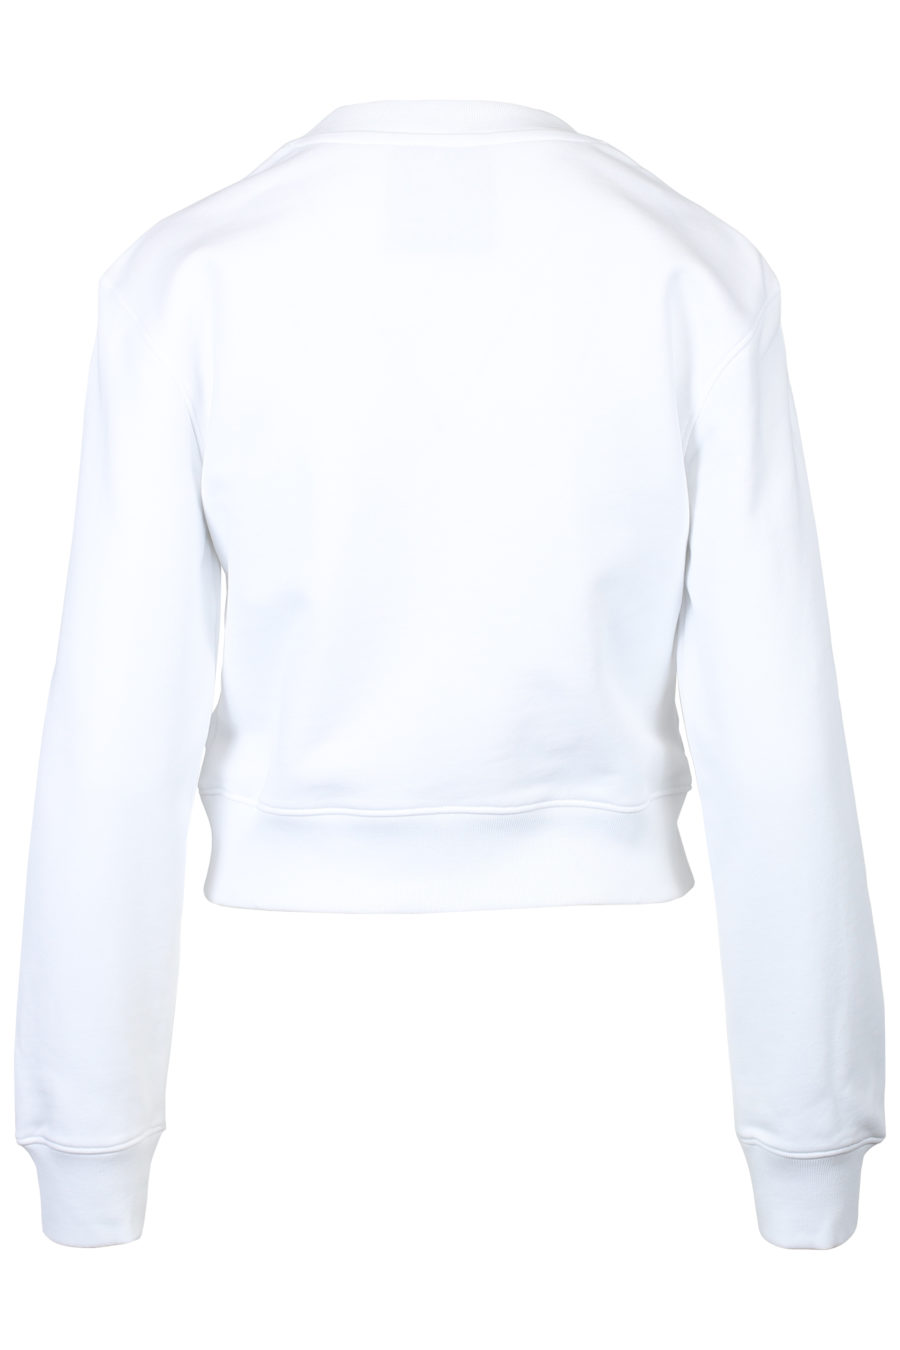 Sudadera blanca con logo grande "Couture" - IMG 2089